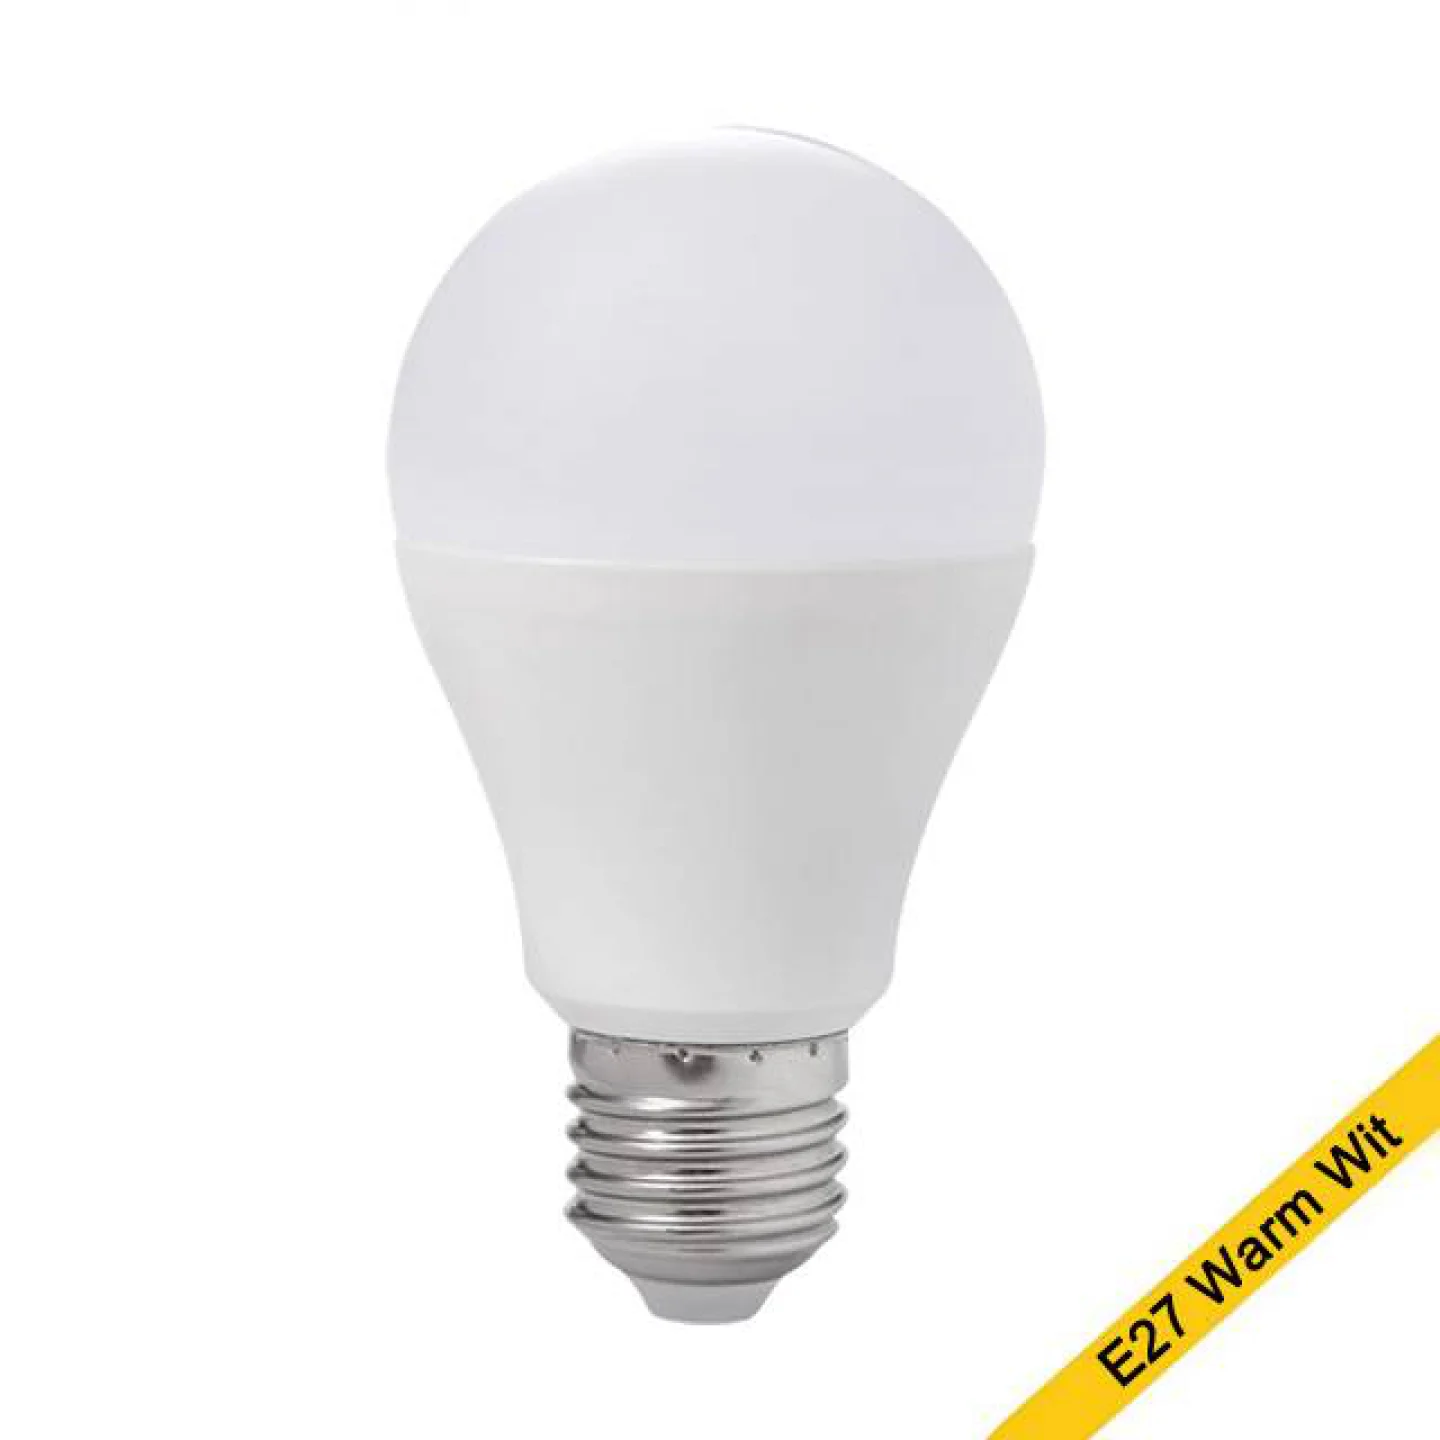 Led lamp gls E27 Warm wit licht standaar.